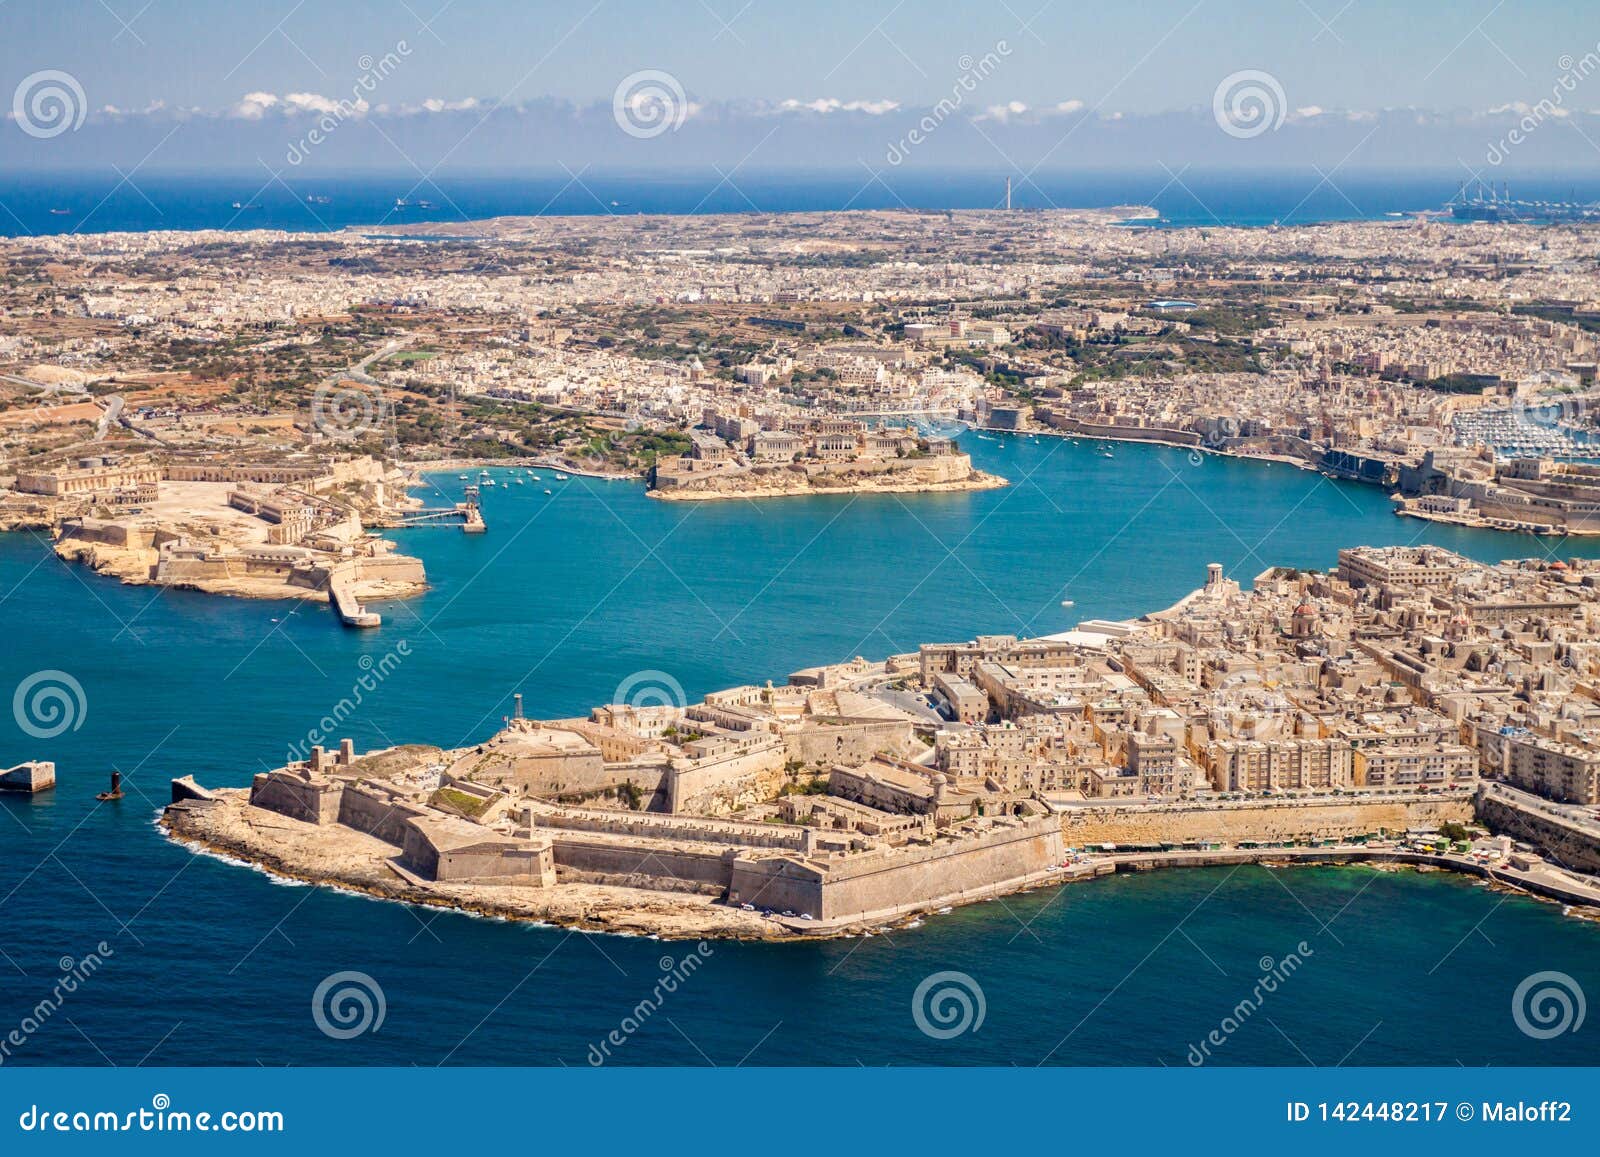 malta aerial view. valetta, capital city of malta, grand harbour, kalkara, senglea and vittoriosa towns, fort ricasoli.